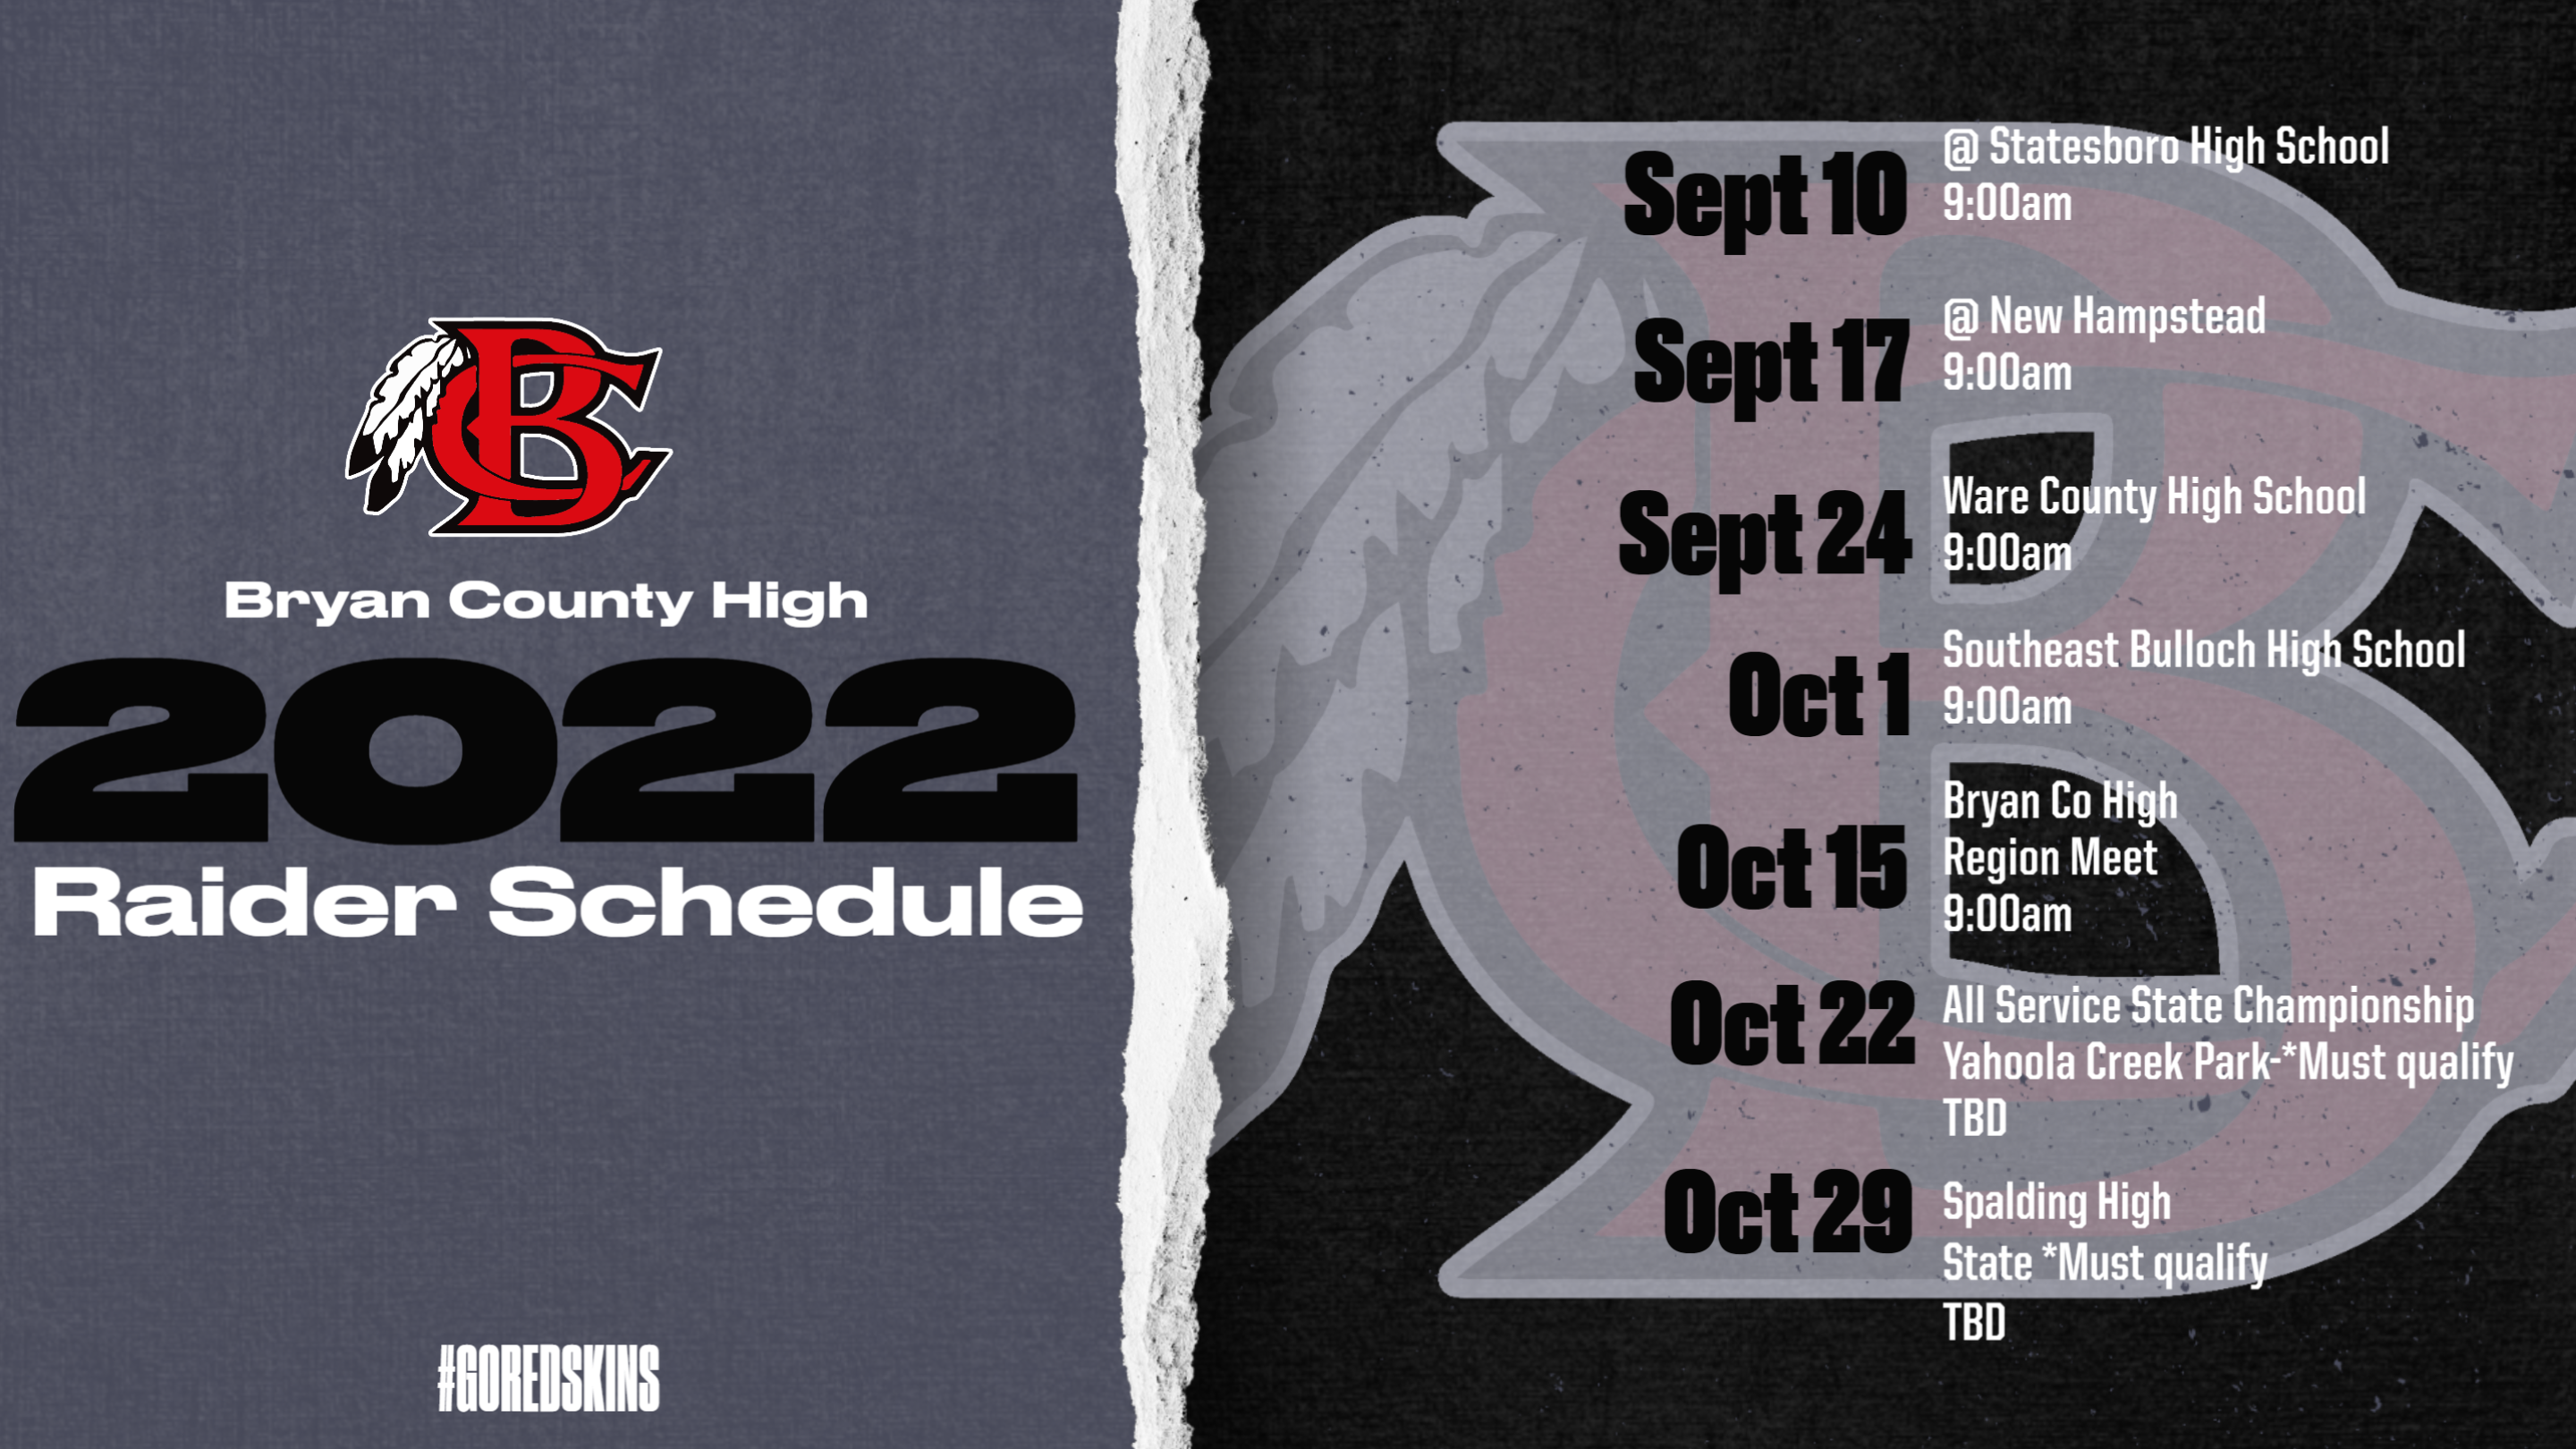 High School Raiders Schedule